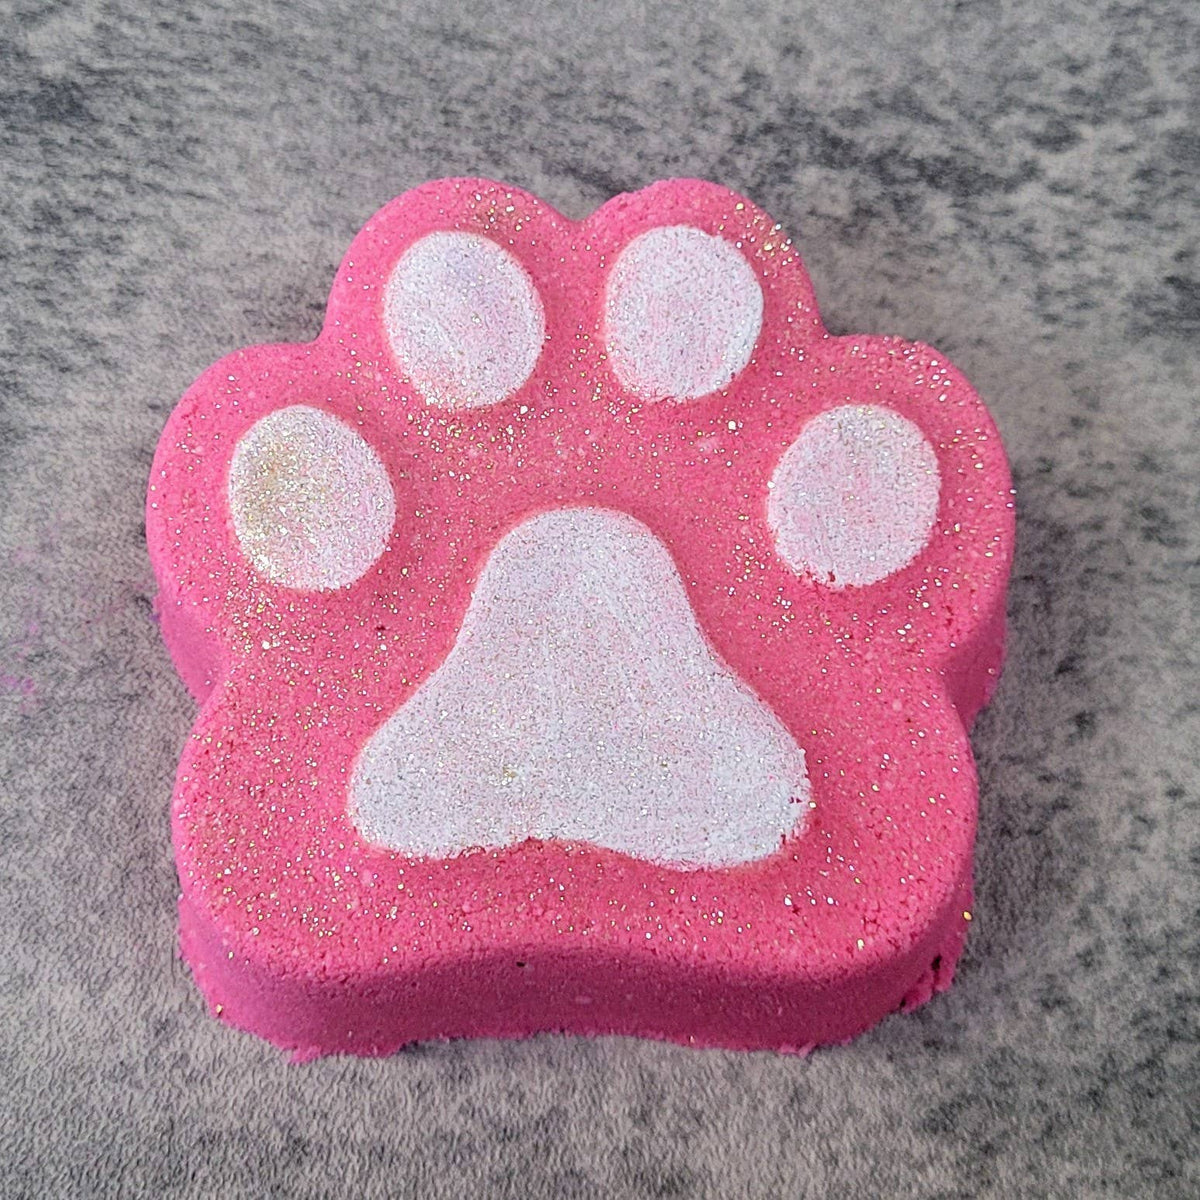 Cute Cat Paw-Shaped Bath Bombs | Handmade & Scented - Sugar Cookie, Wonderberry, Raspberry Vanilla